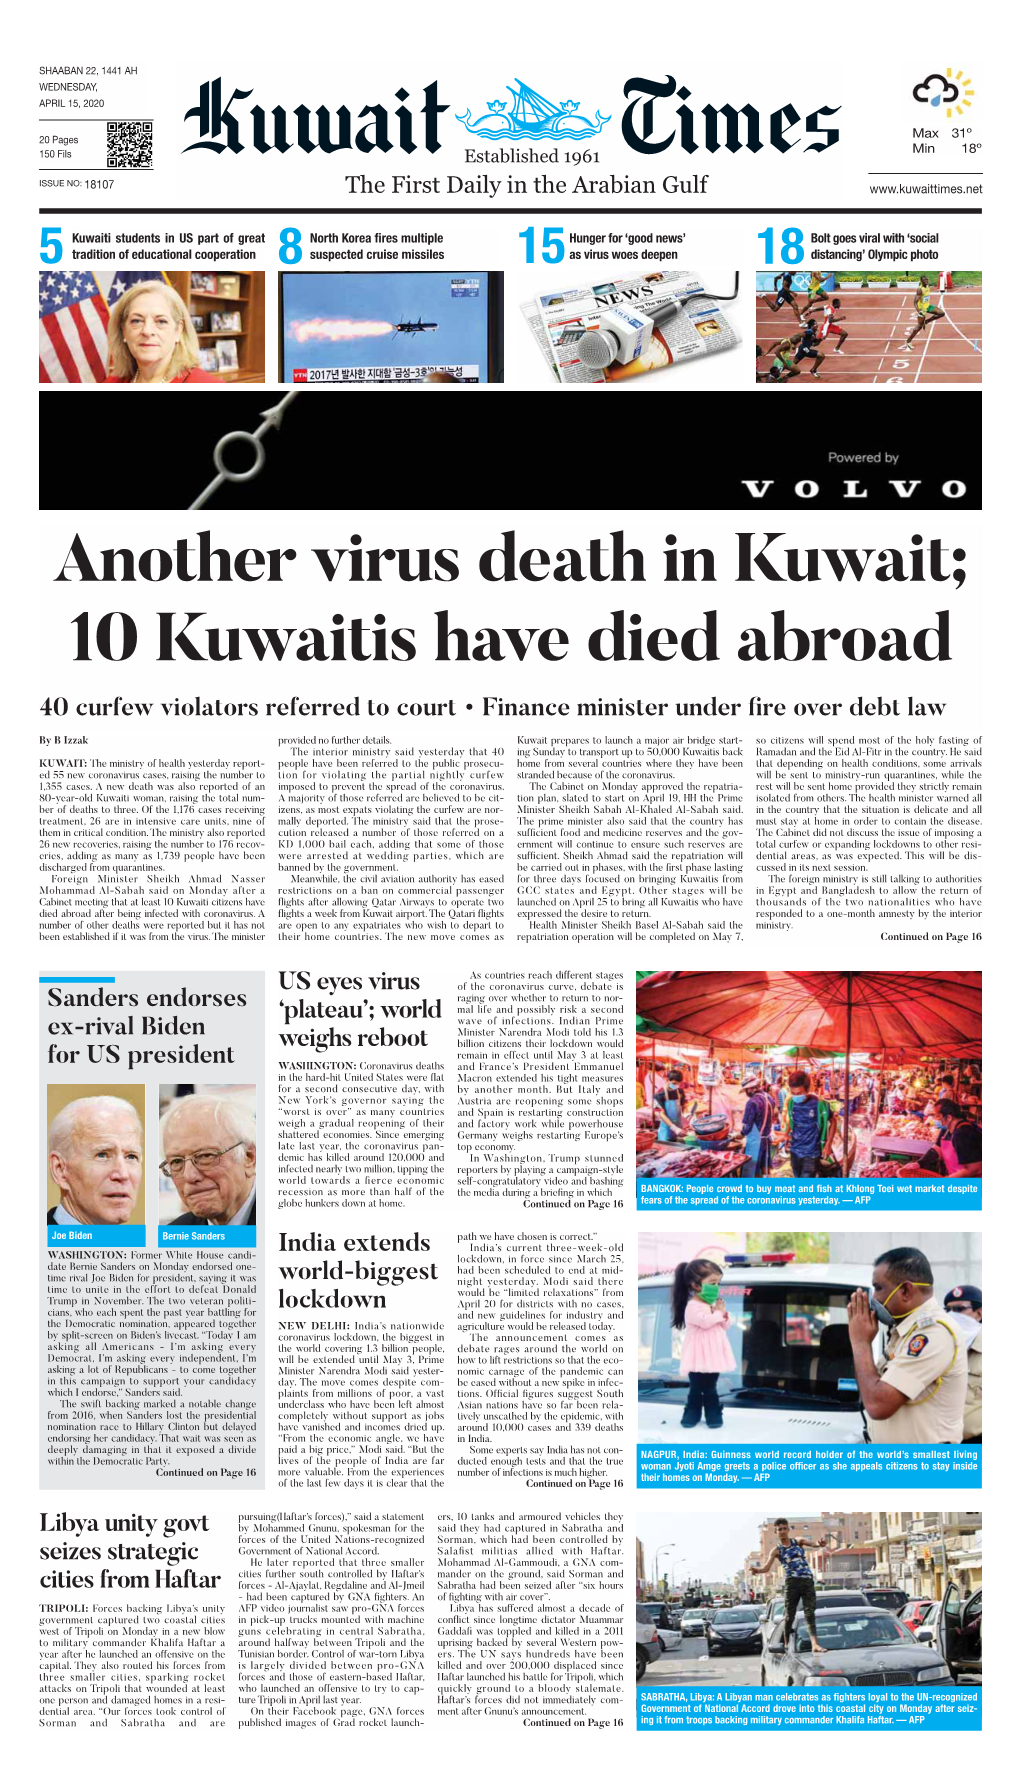 Another Virus Death in Kuwait; 10 Kuwaitis Have Died Abroad